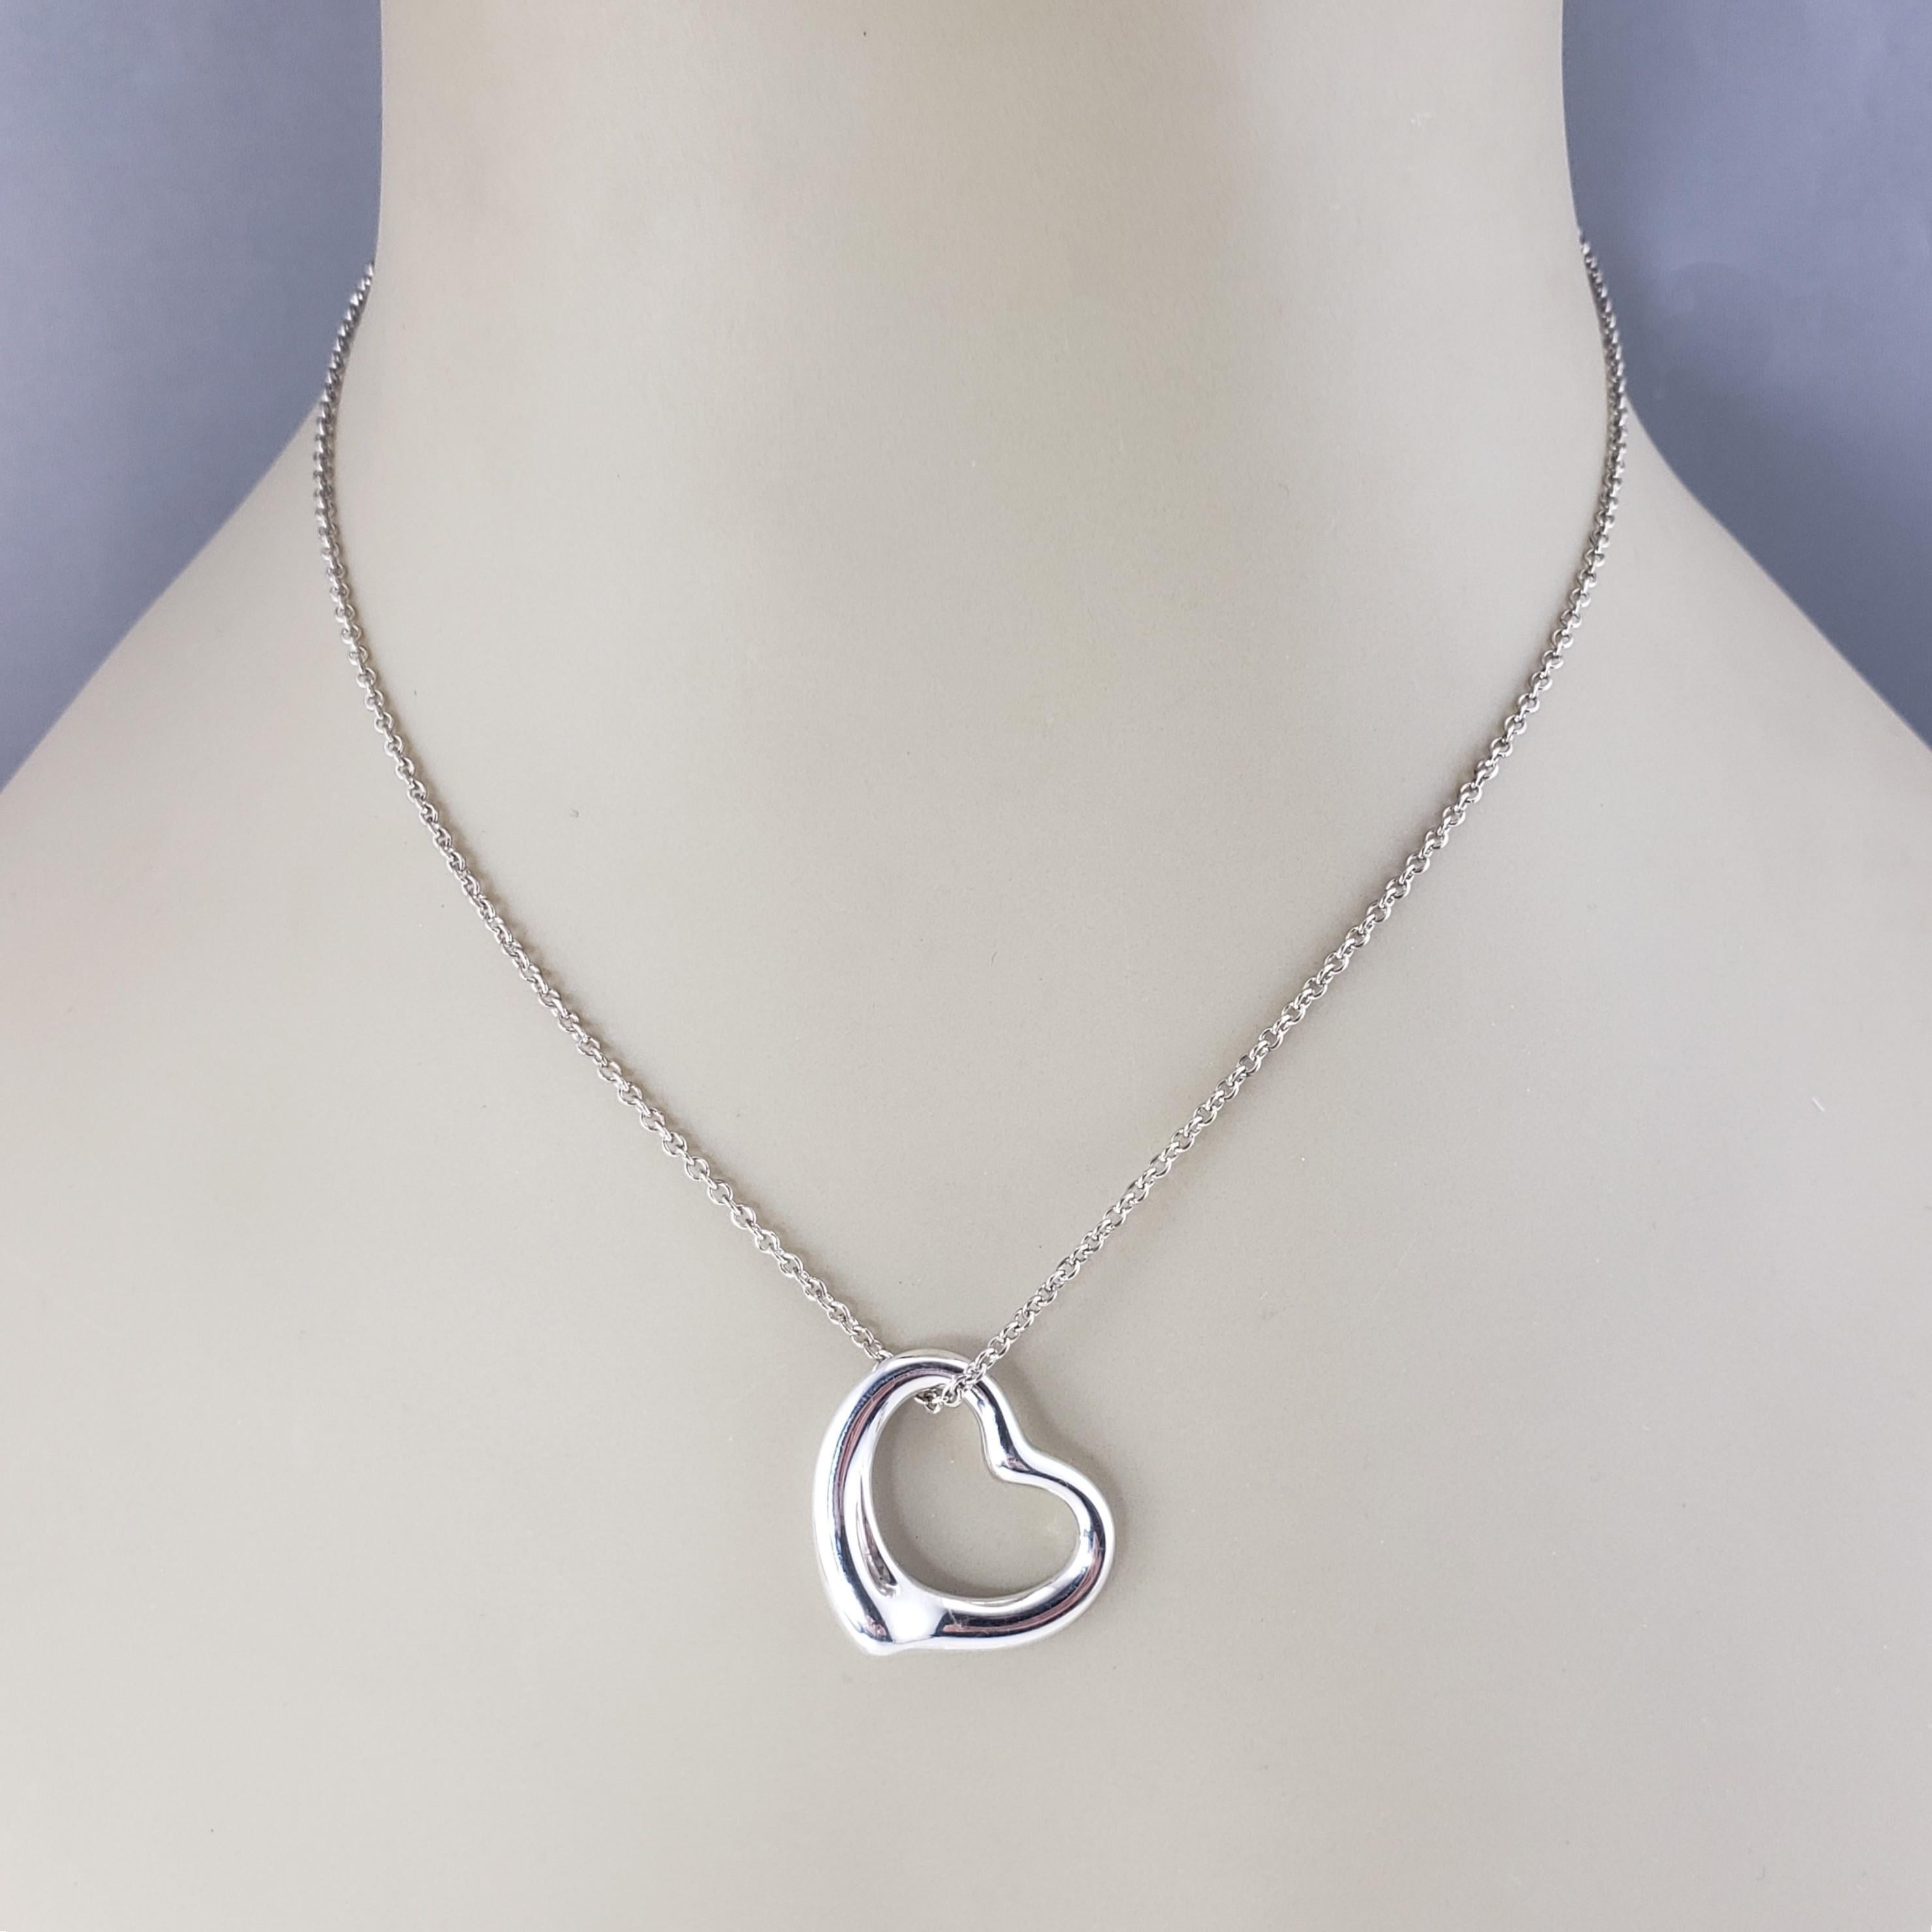 Tiffany & Co. Elsa Peretti Sterling Silver Open Heart Necklace #16845 For Sale 3